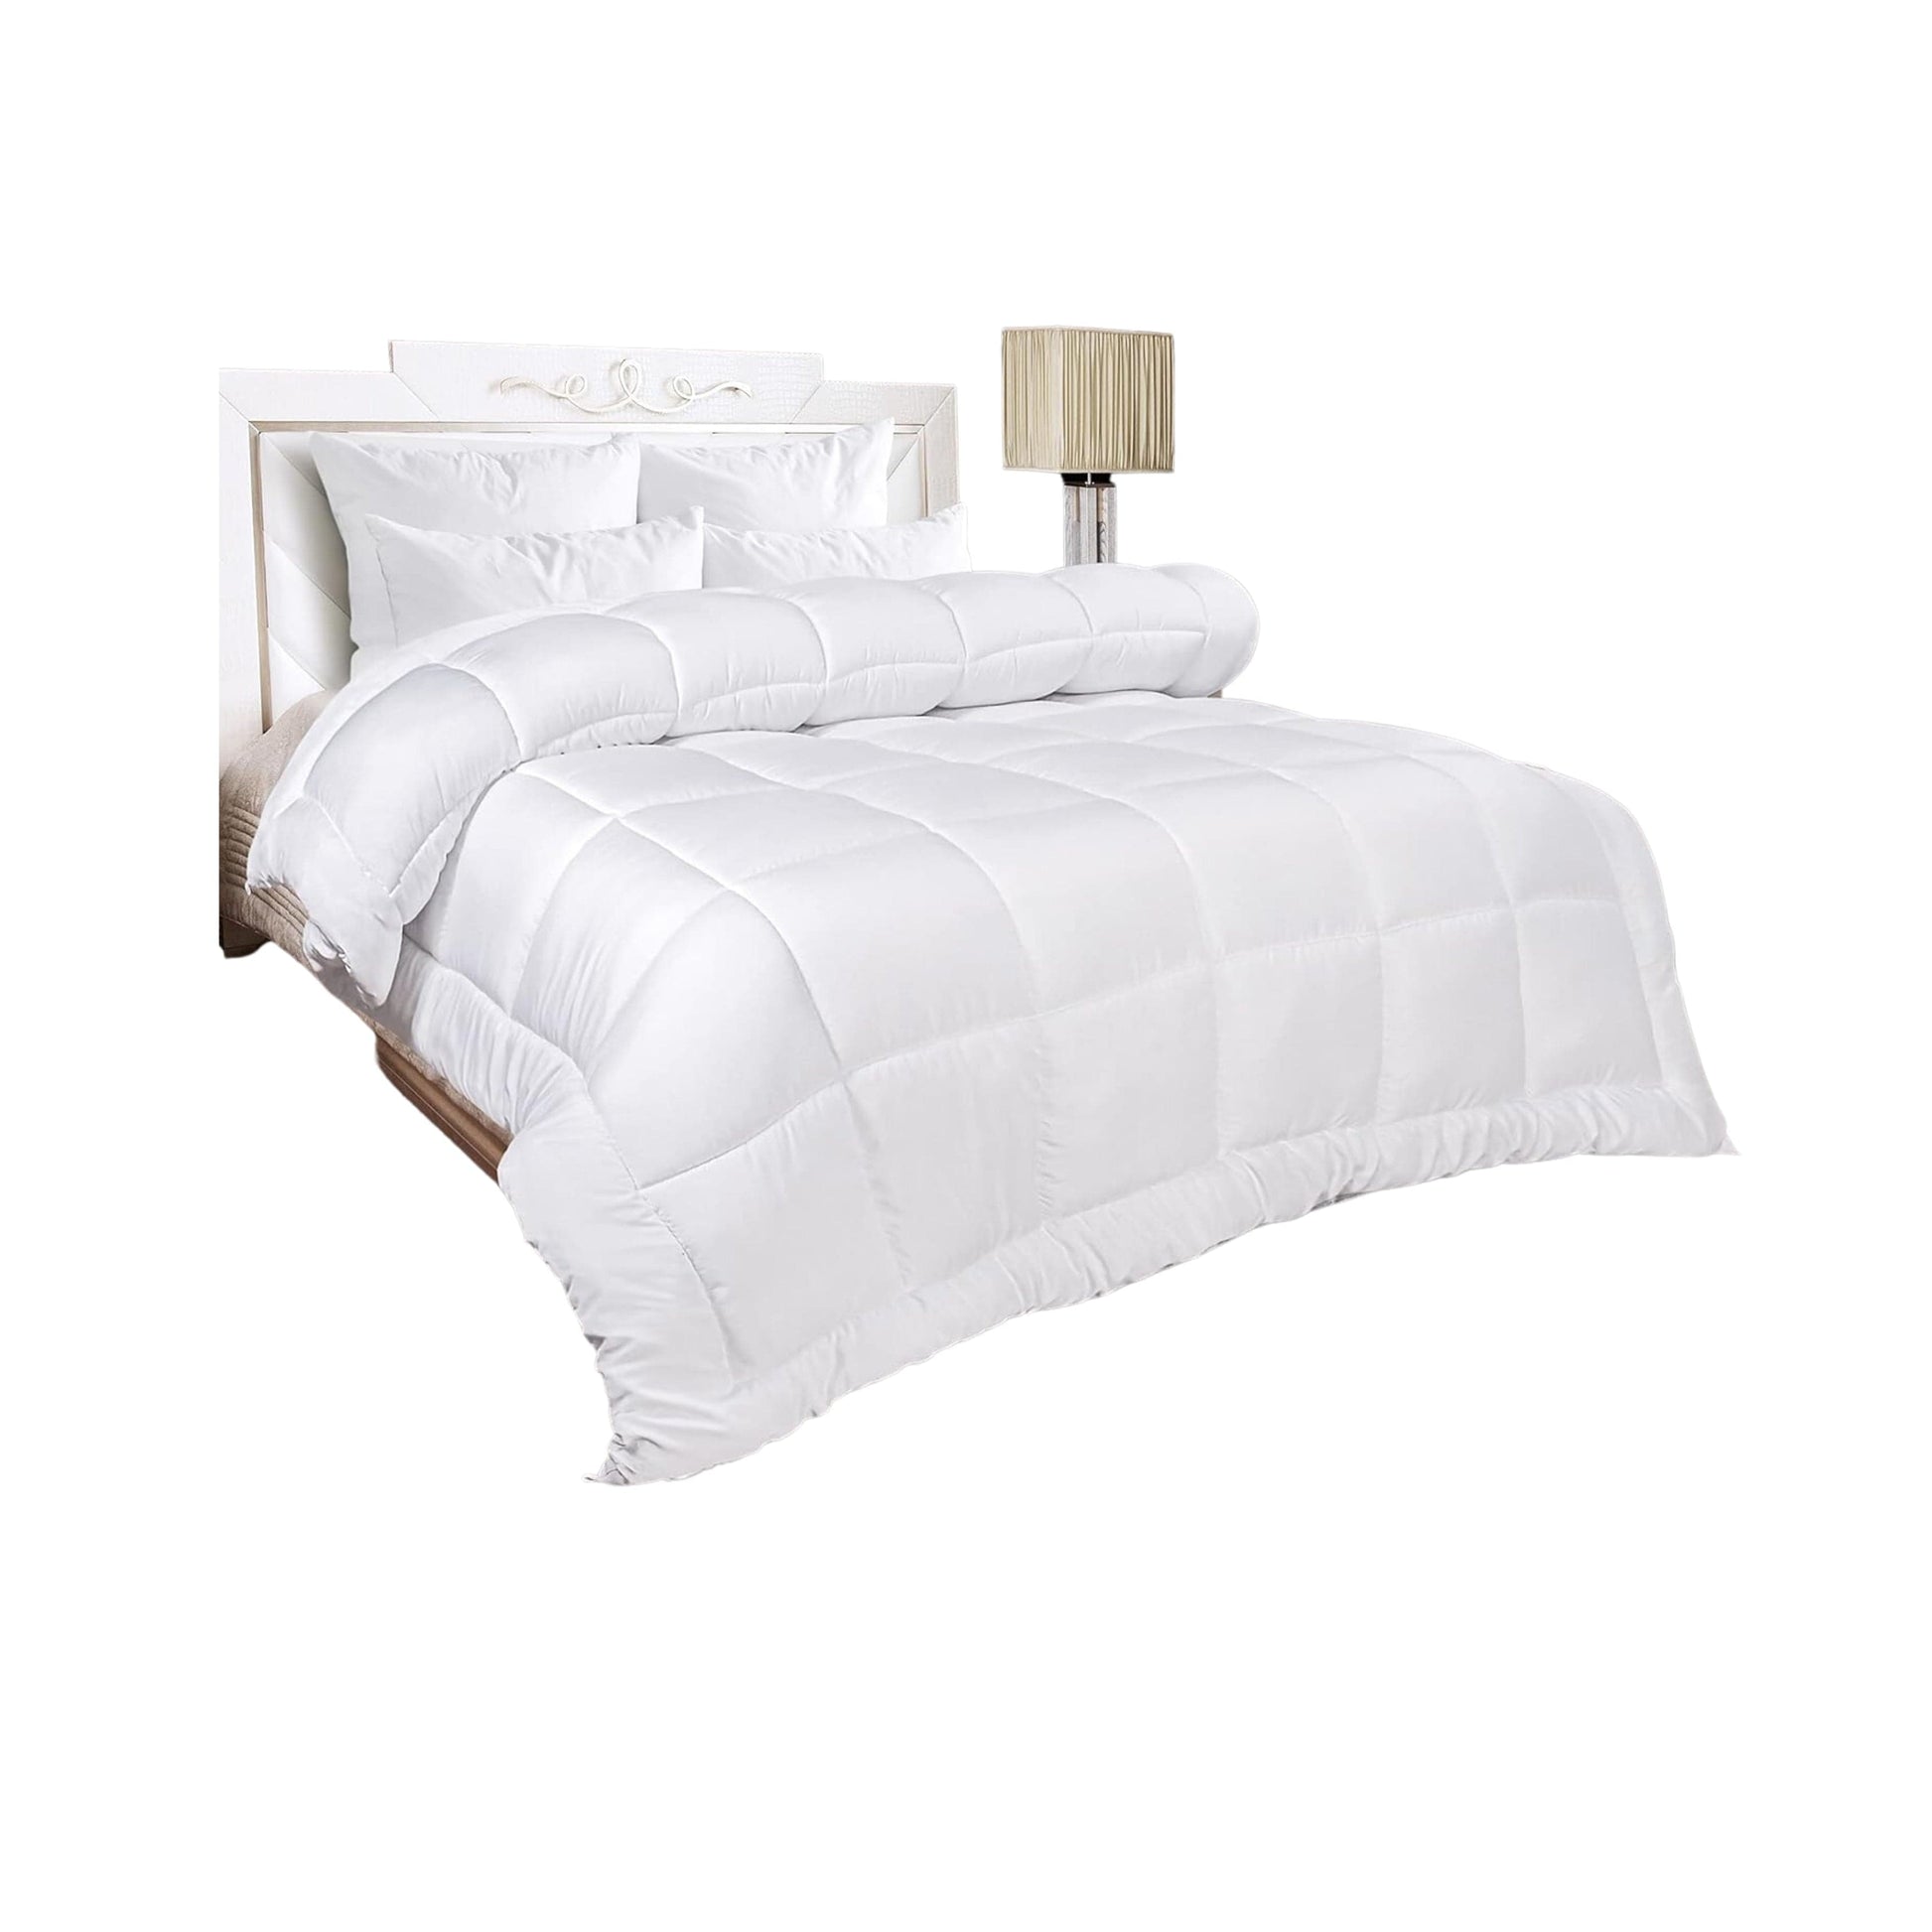 UTOPIA Comforter White UTOPIA - Alternative Quilted Comforter